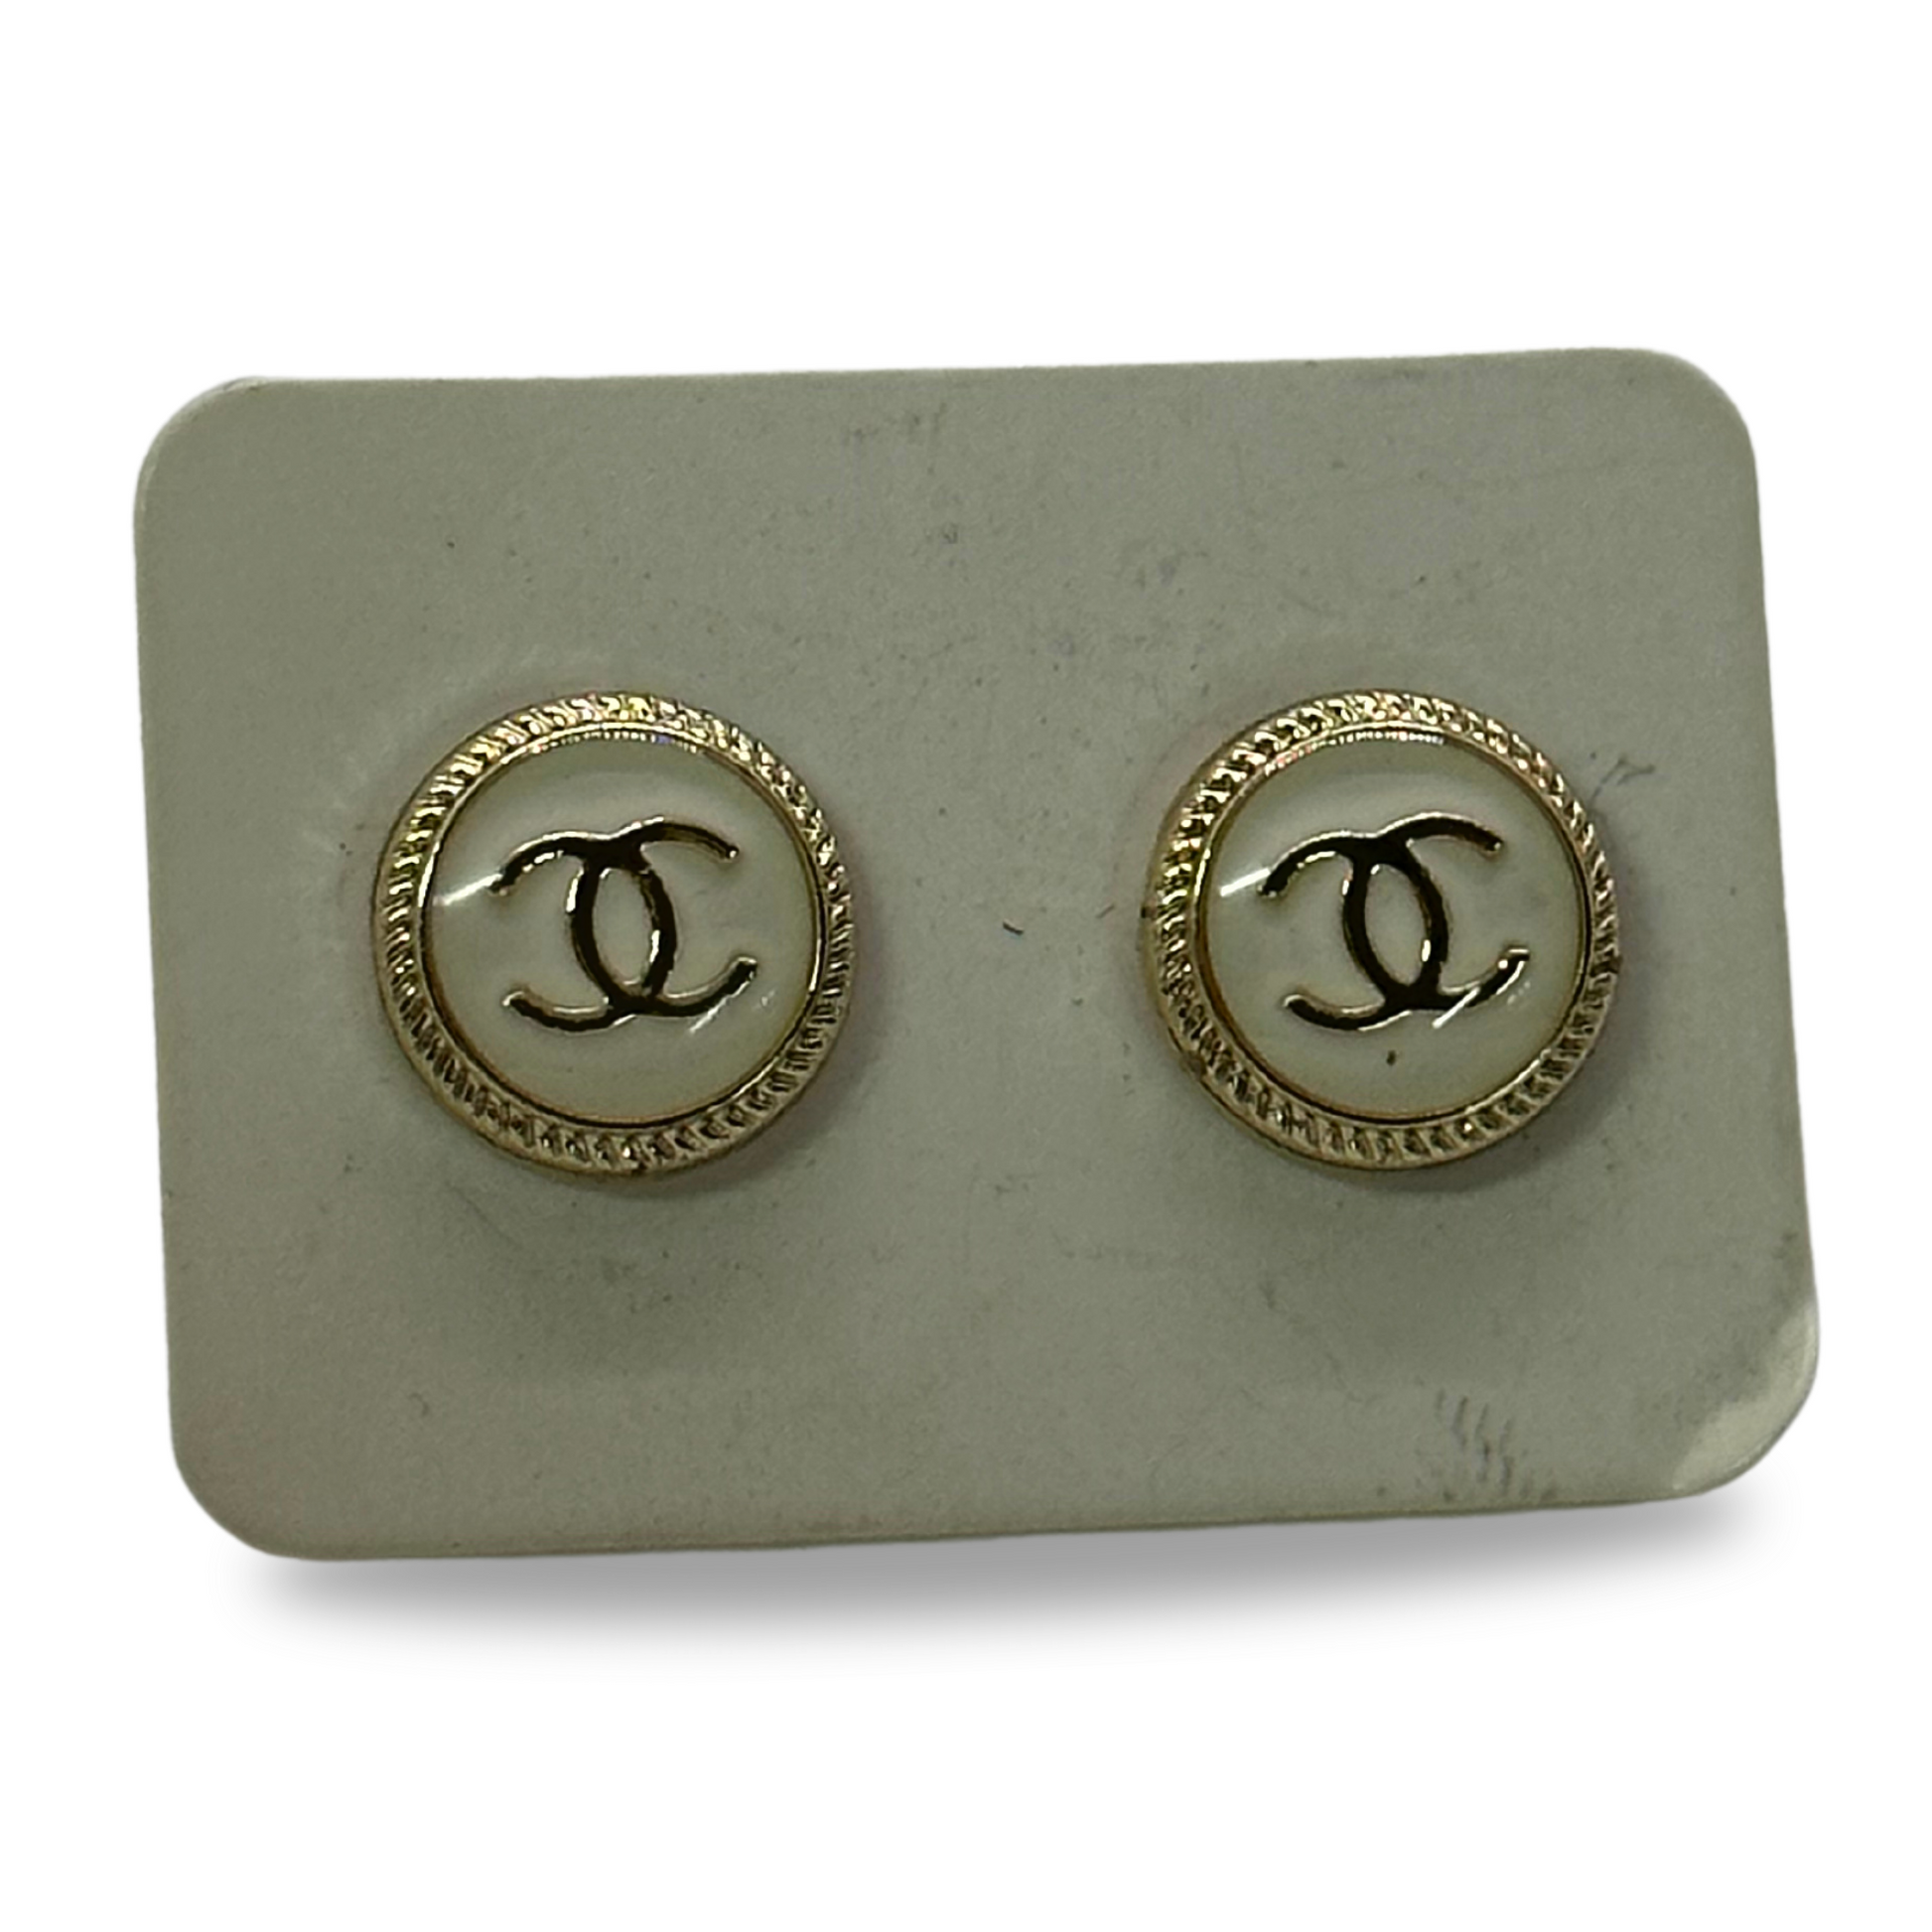 CHANEL, Jewelry, Chanel Multicolor Rhinestone Cc Stud Earrings